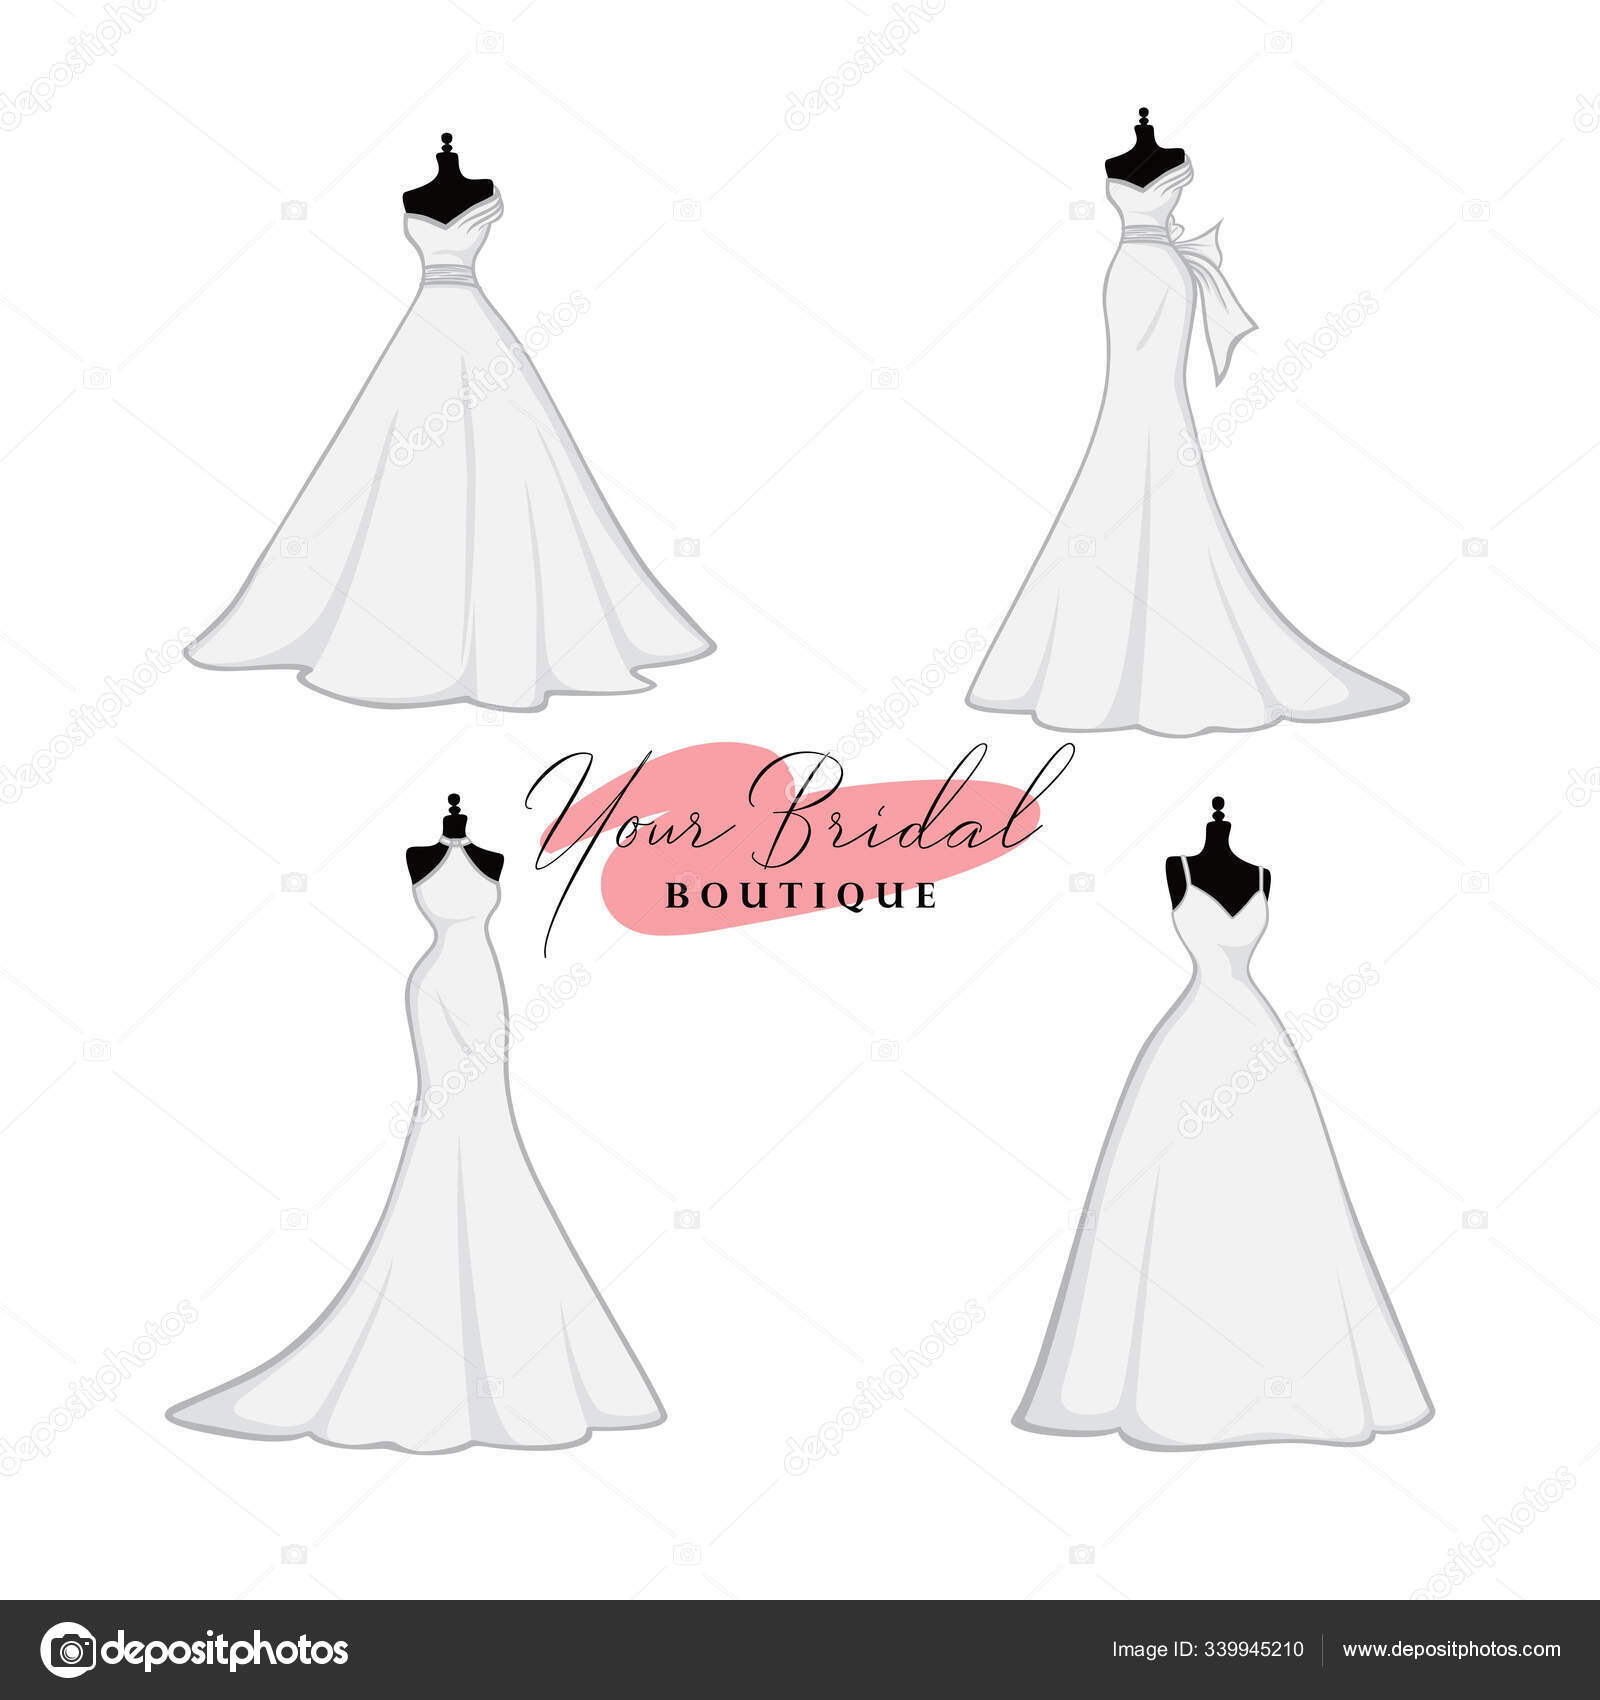 Premium Vector | Dress boutique bridal logo illustration vector design